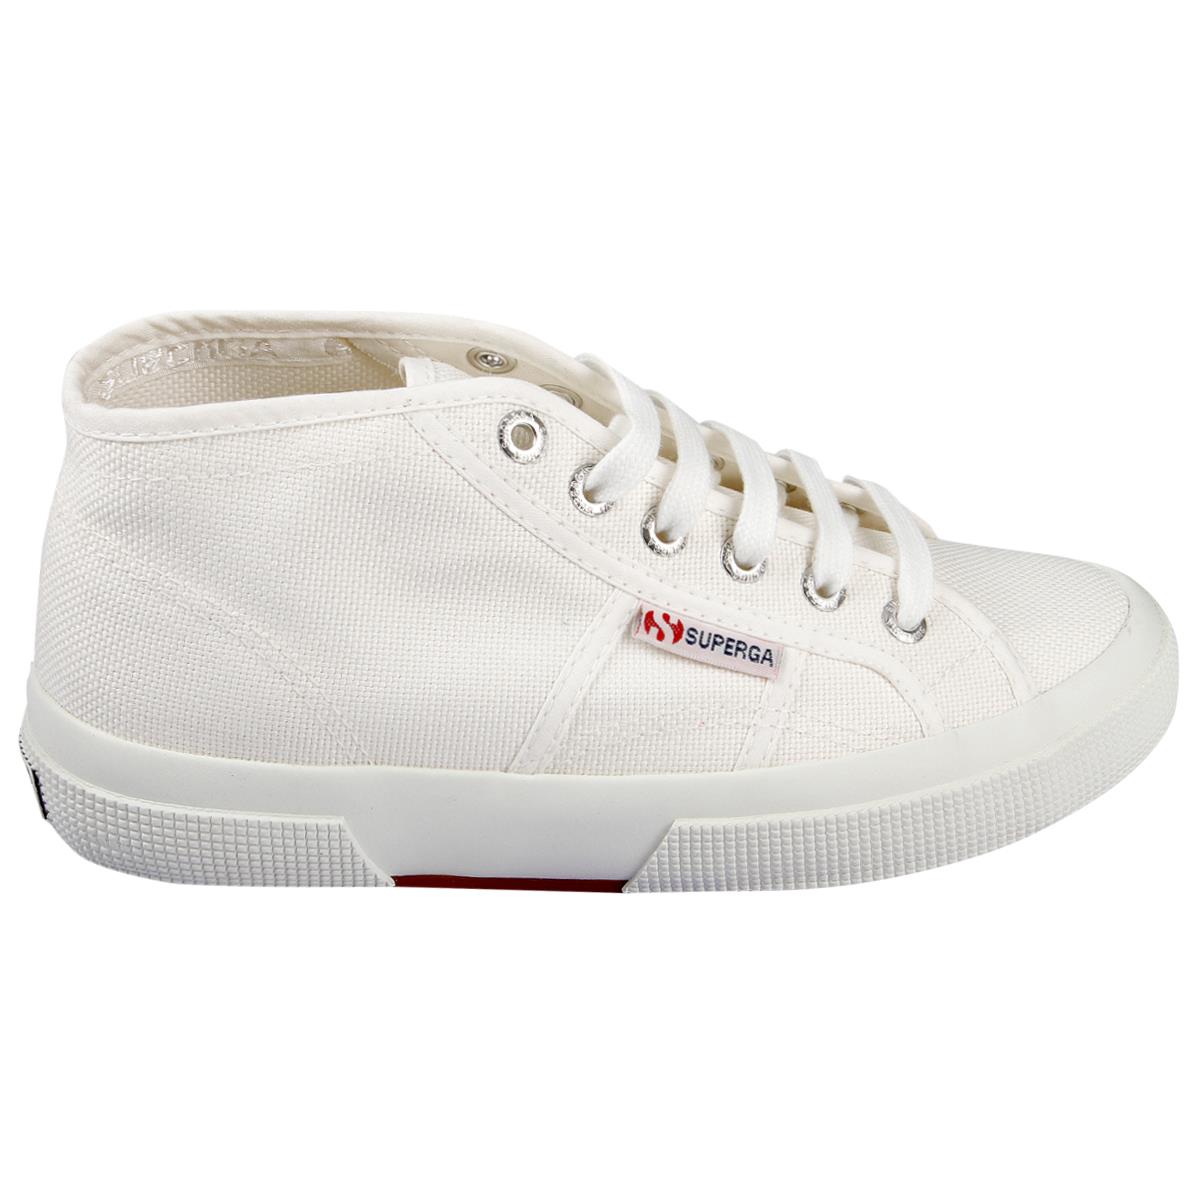 Giày sneaker unisex cao cổ 2750 Fashion Superga màu trắng - S000920_901_F16